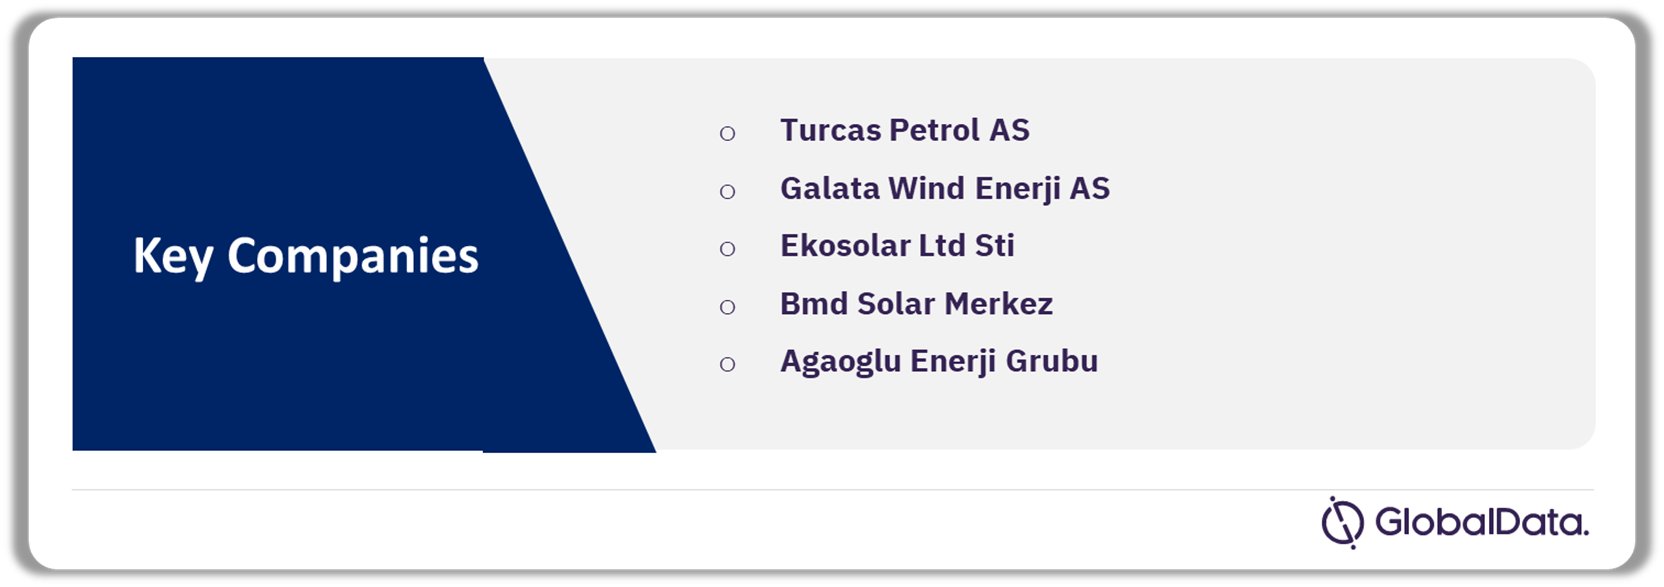 Turkey Wind Power Market Analysis by Companies